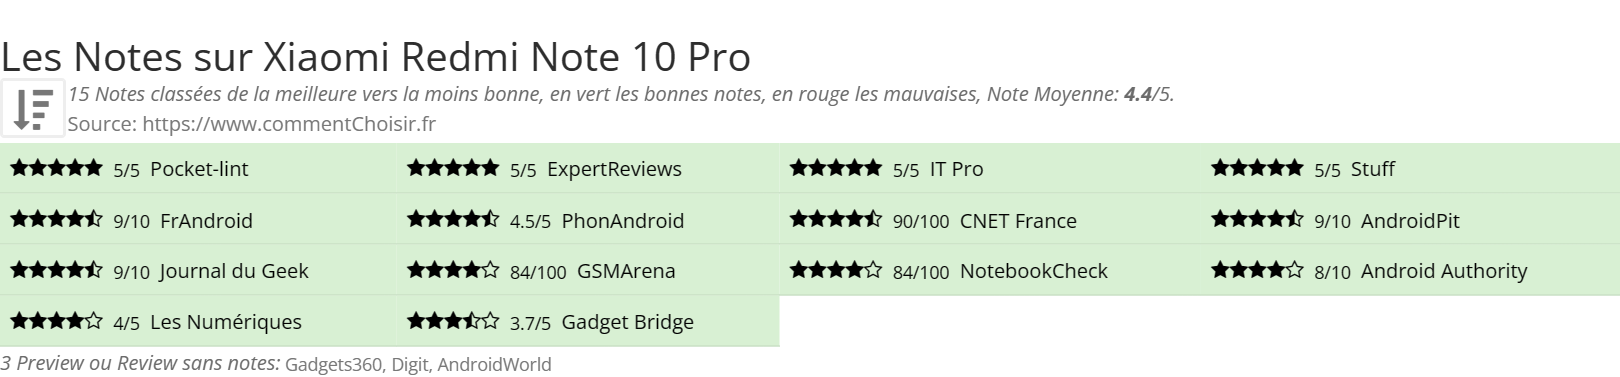 Ratings Xiaomi Redmi Note 10 Pro